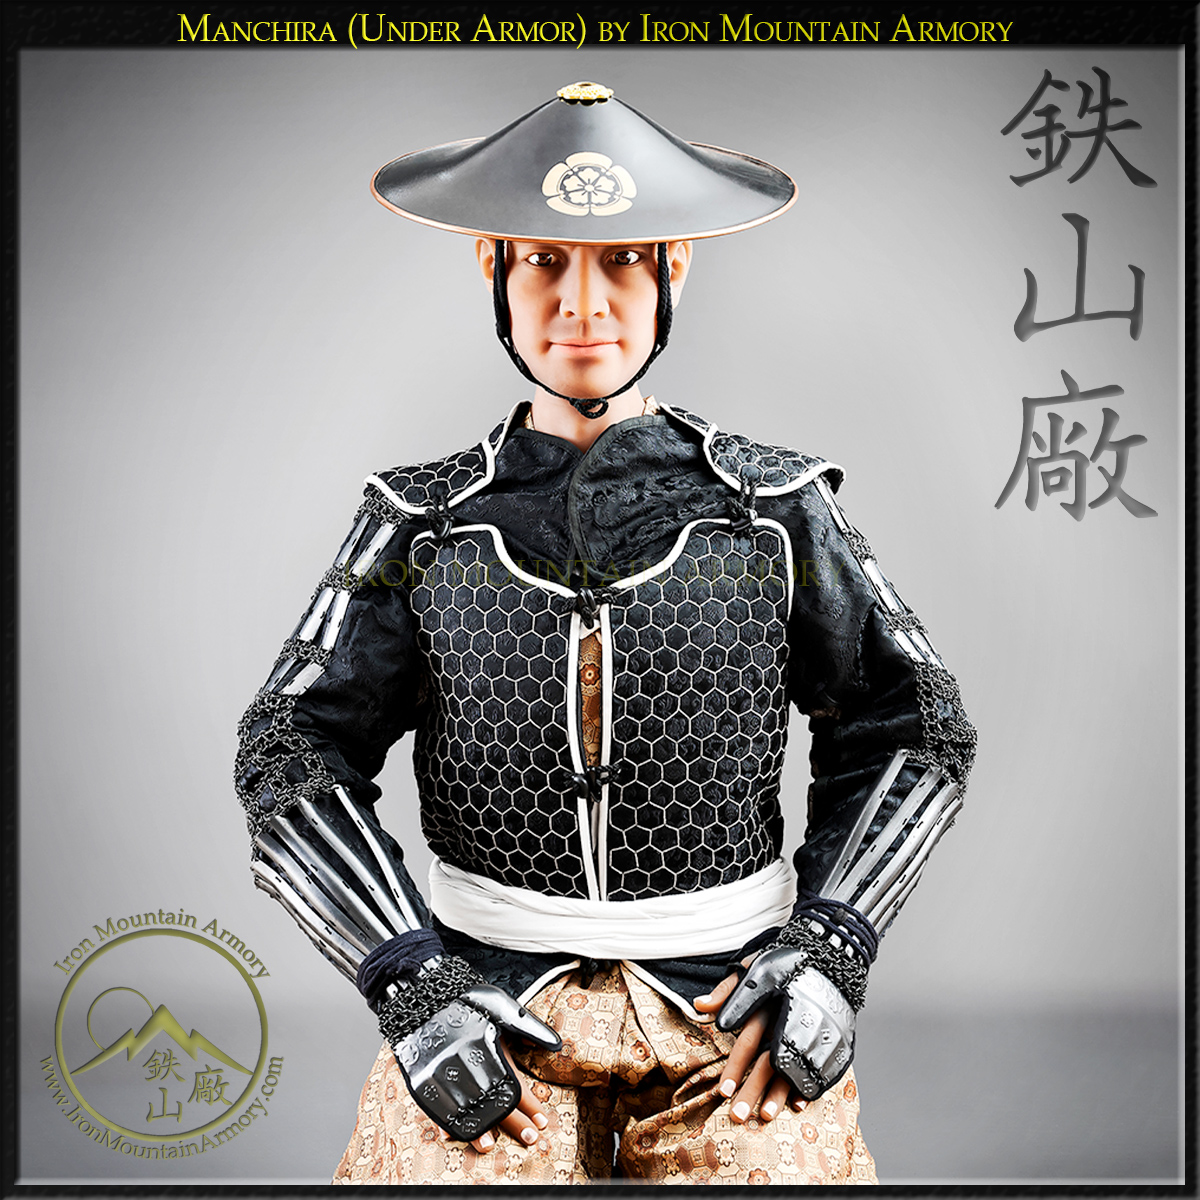 Manchira (Under Armor) - Lightweight Flexible Auxiliary Chest